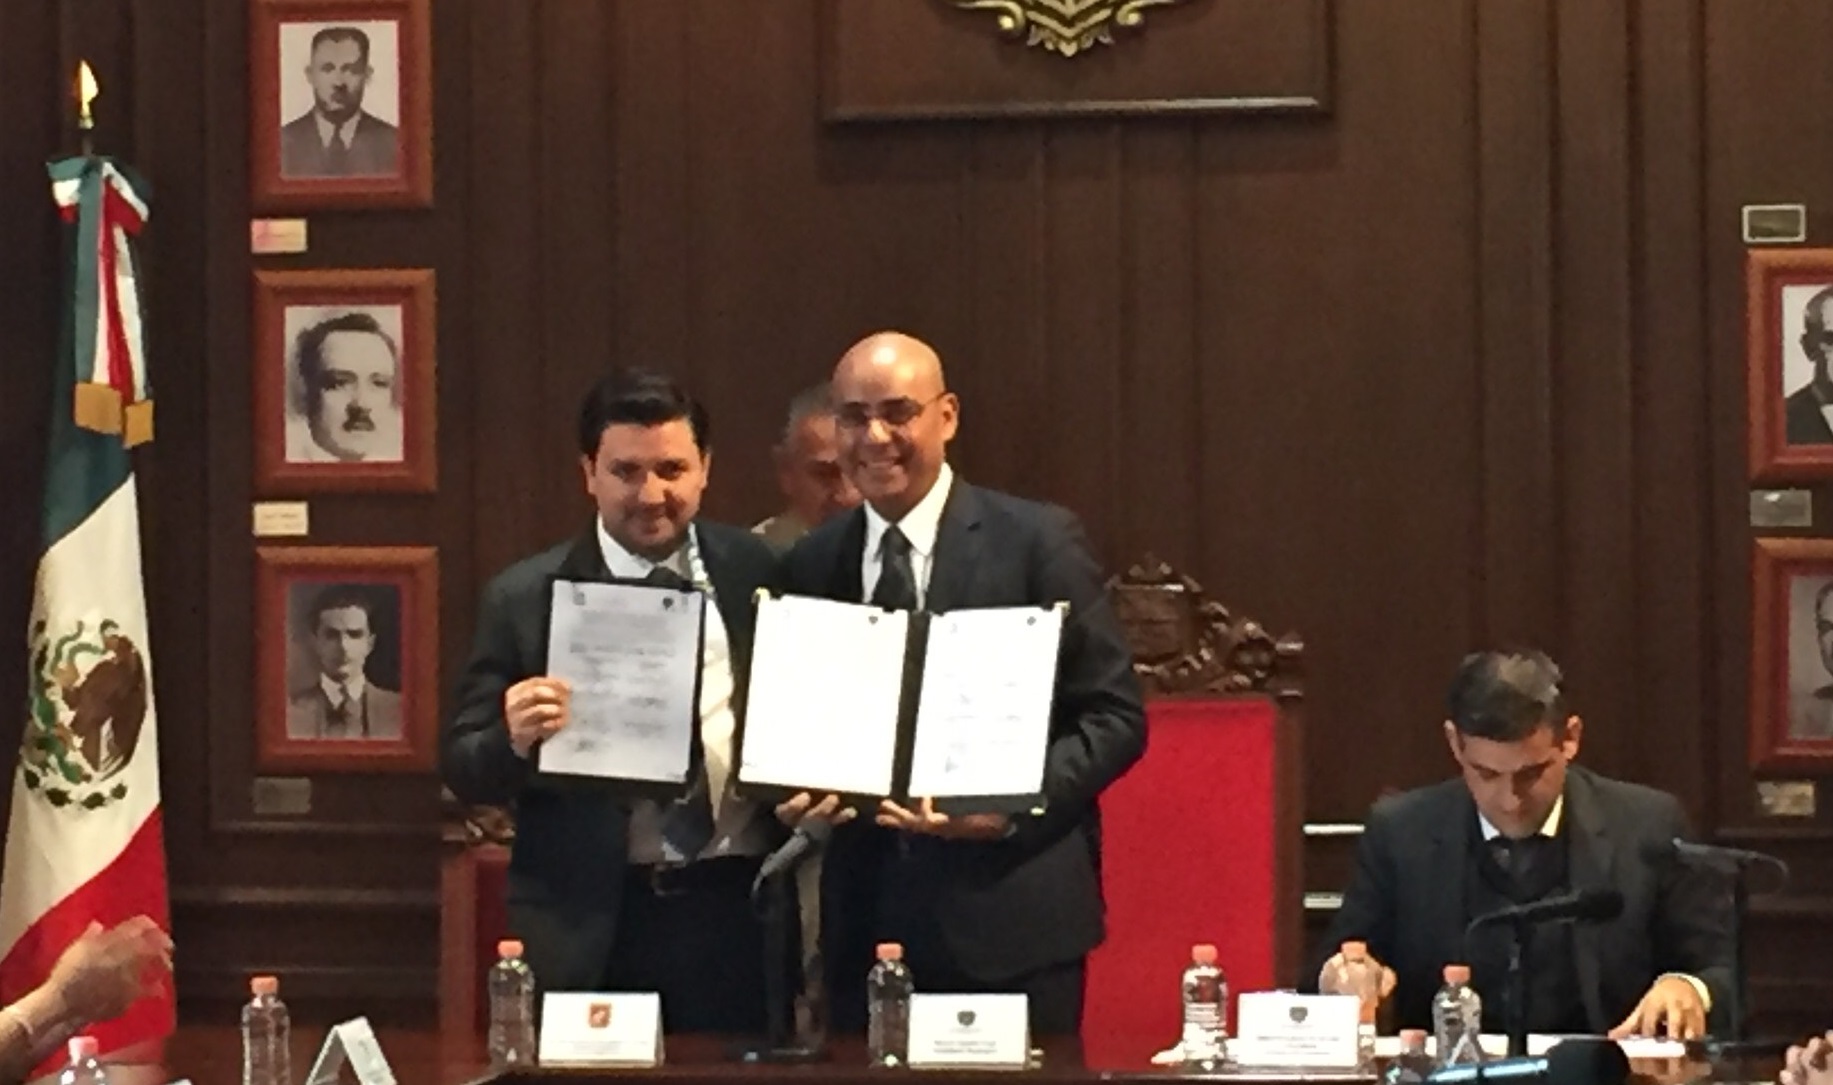  Municipio de Querétaro y Tuxtla Gutiérrez firman acuerdo intermunicipal